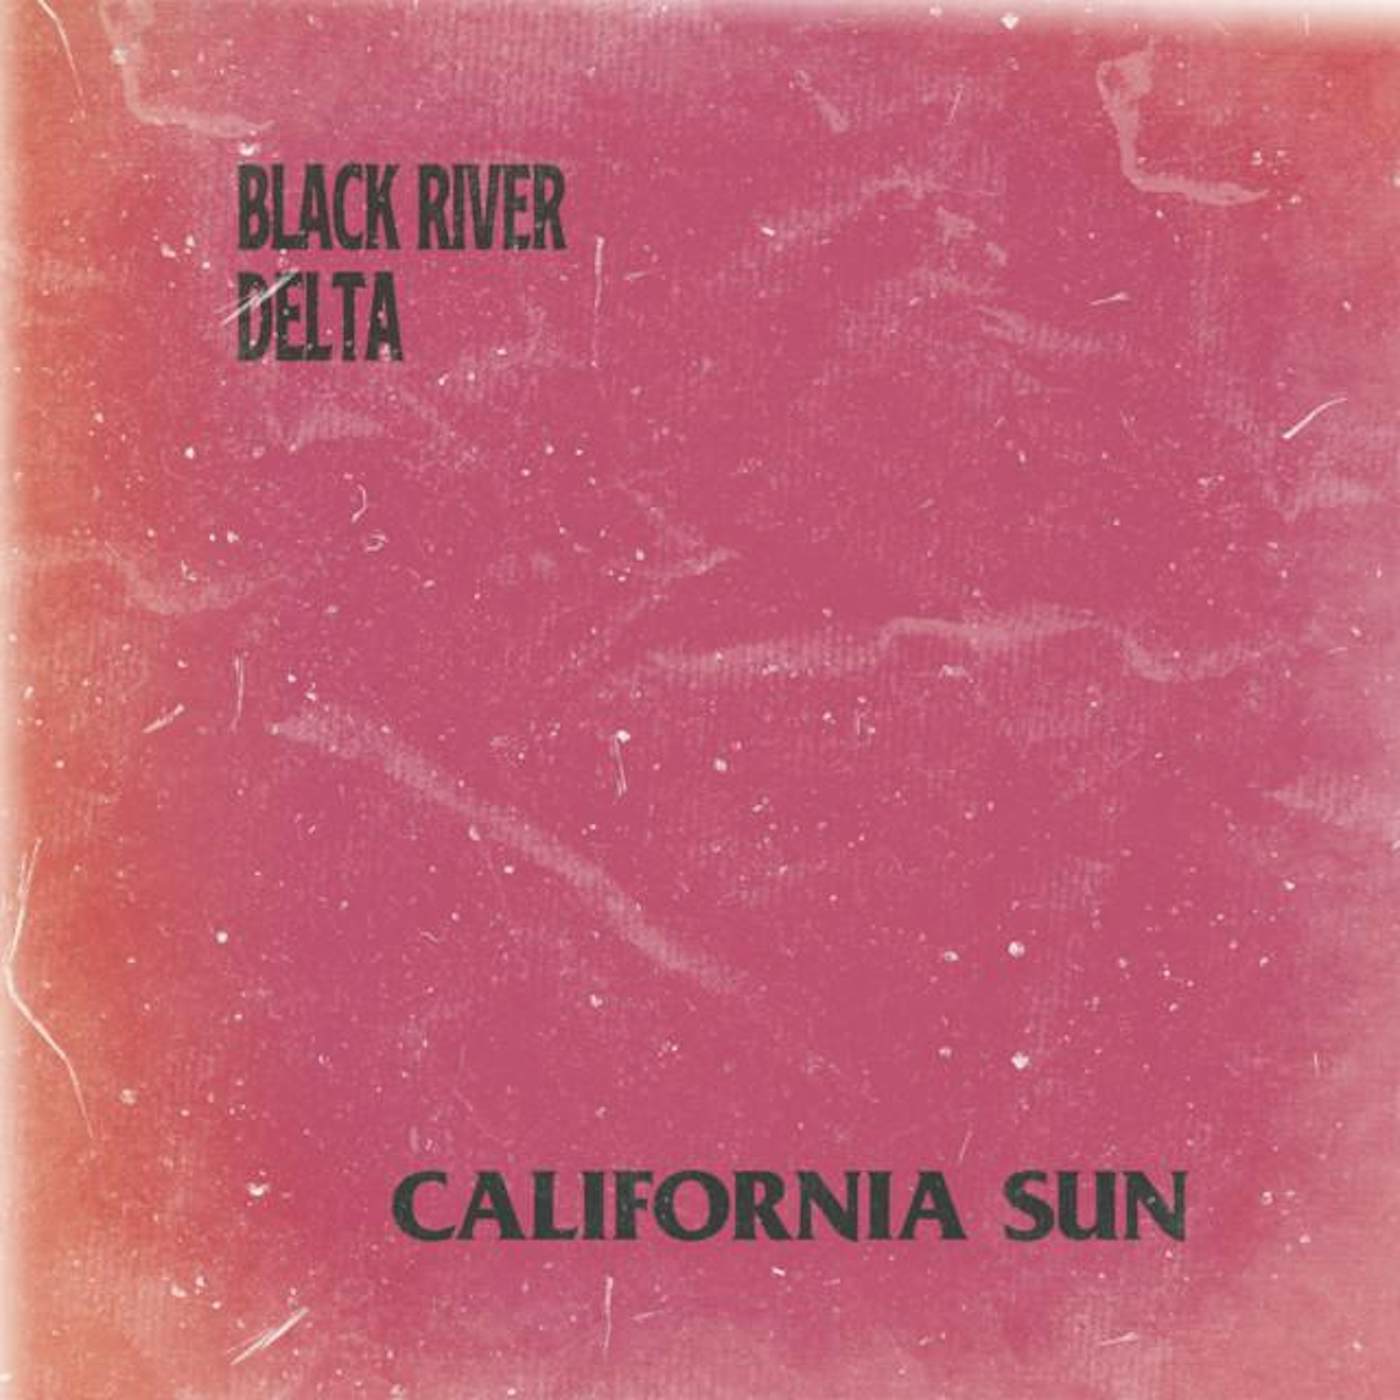 Black River Delta